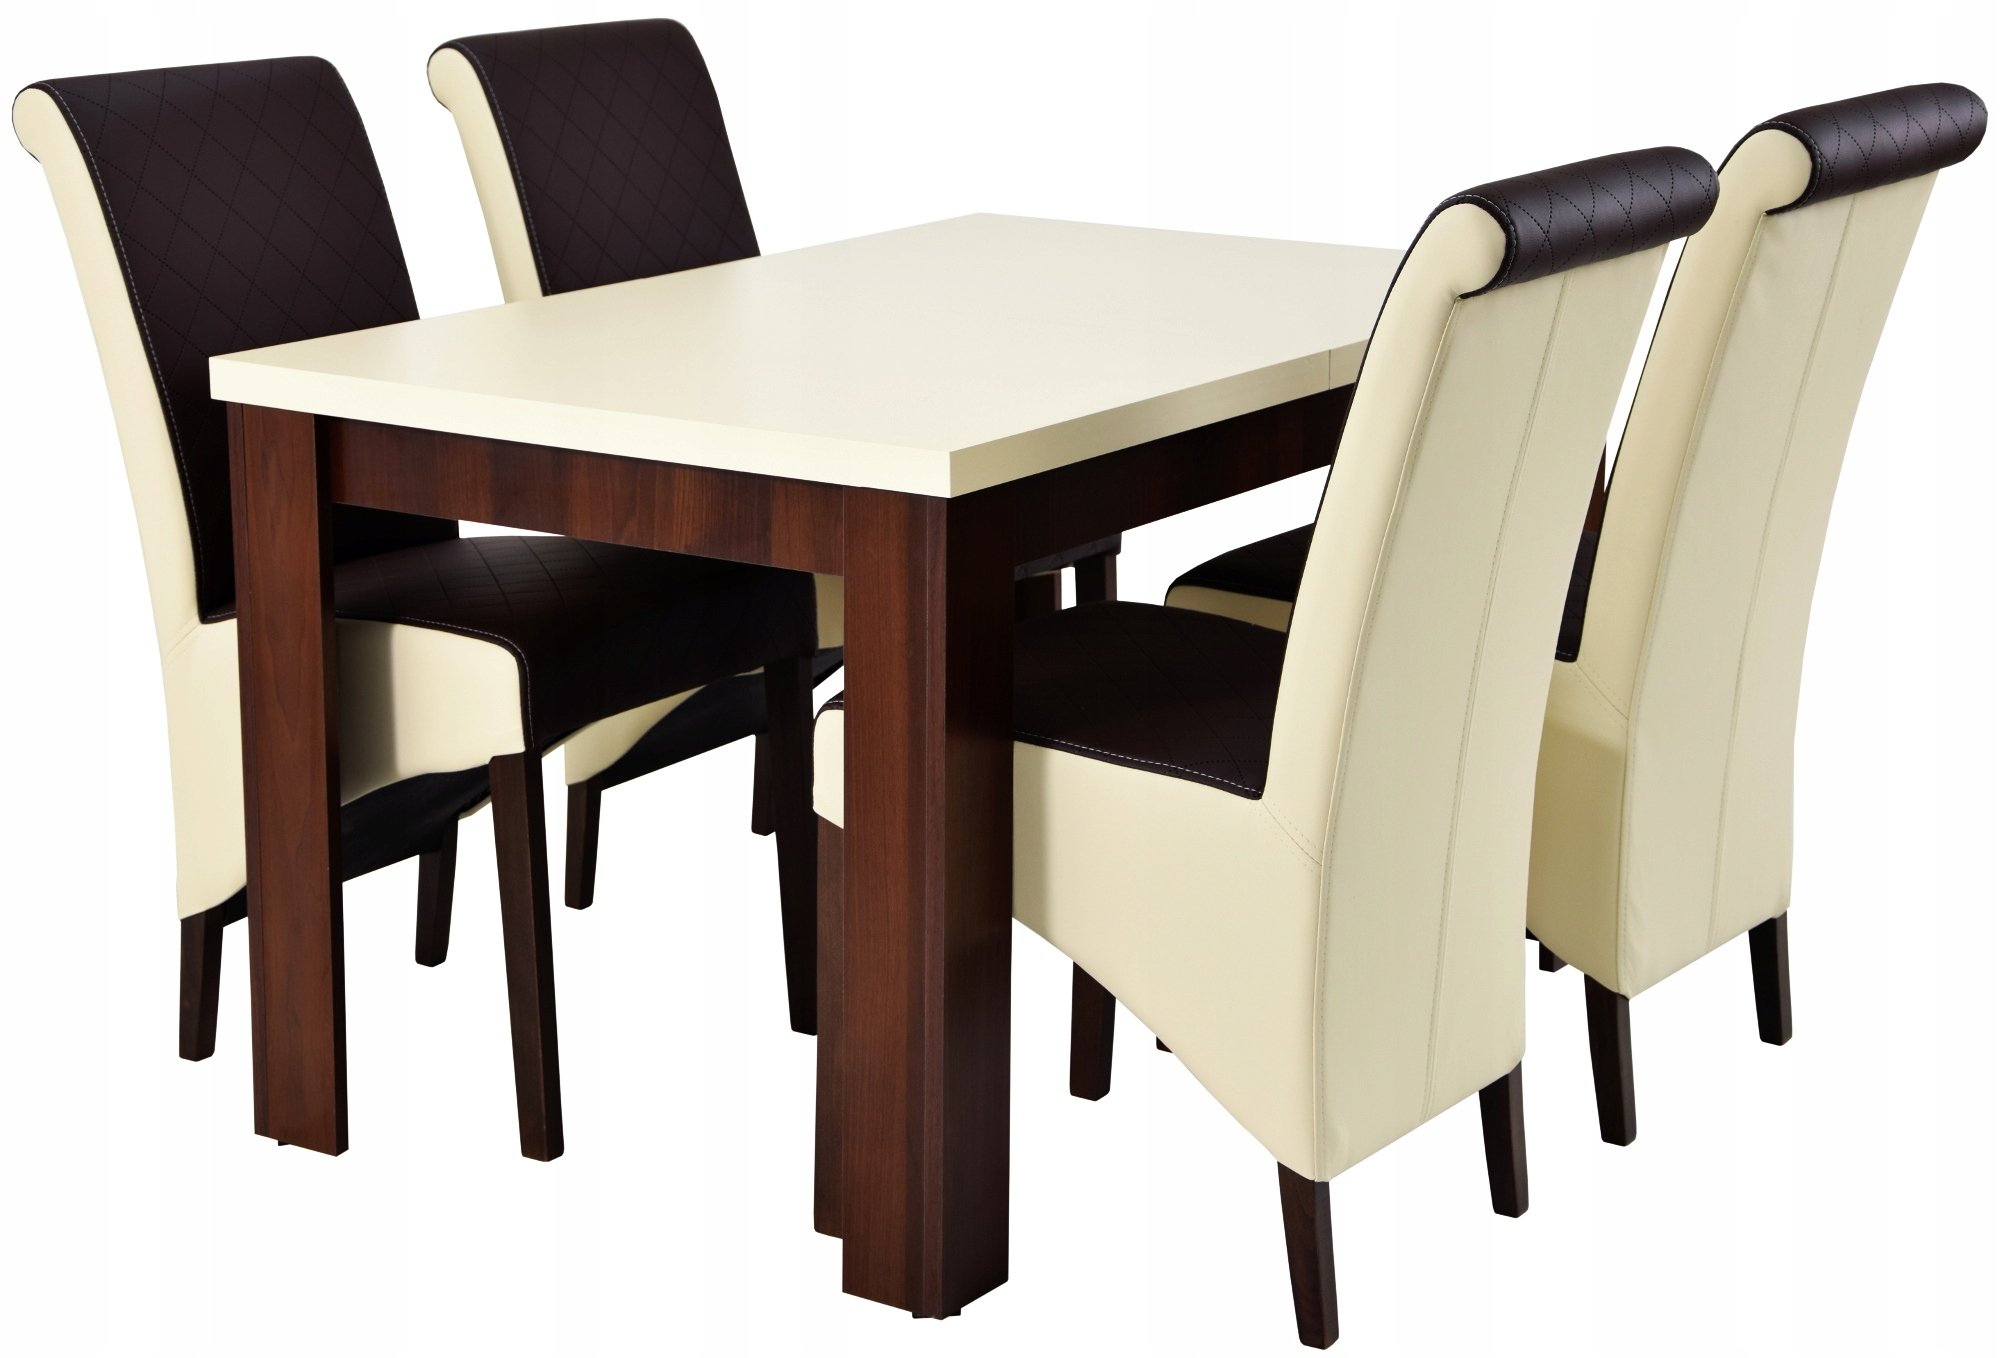 Кухонный комплект стол и стулья. Стол 120х80. Стол Allure + 4 стула Alicia. Стол кухонный. Кухонный стол и стулья.